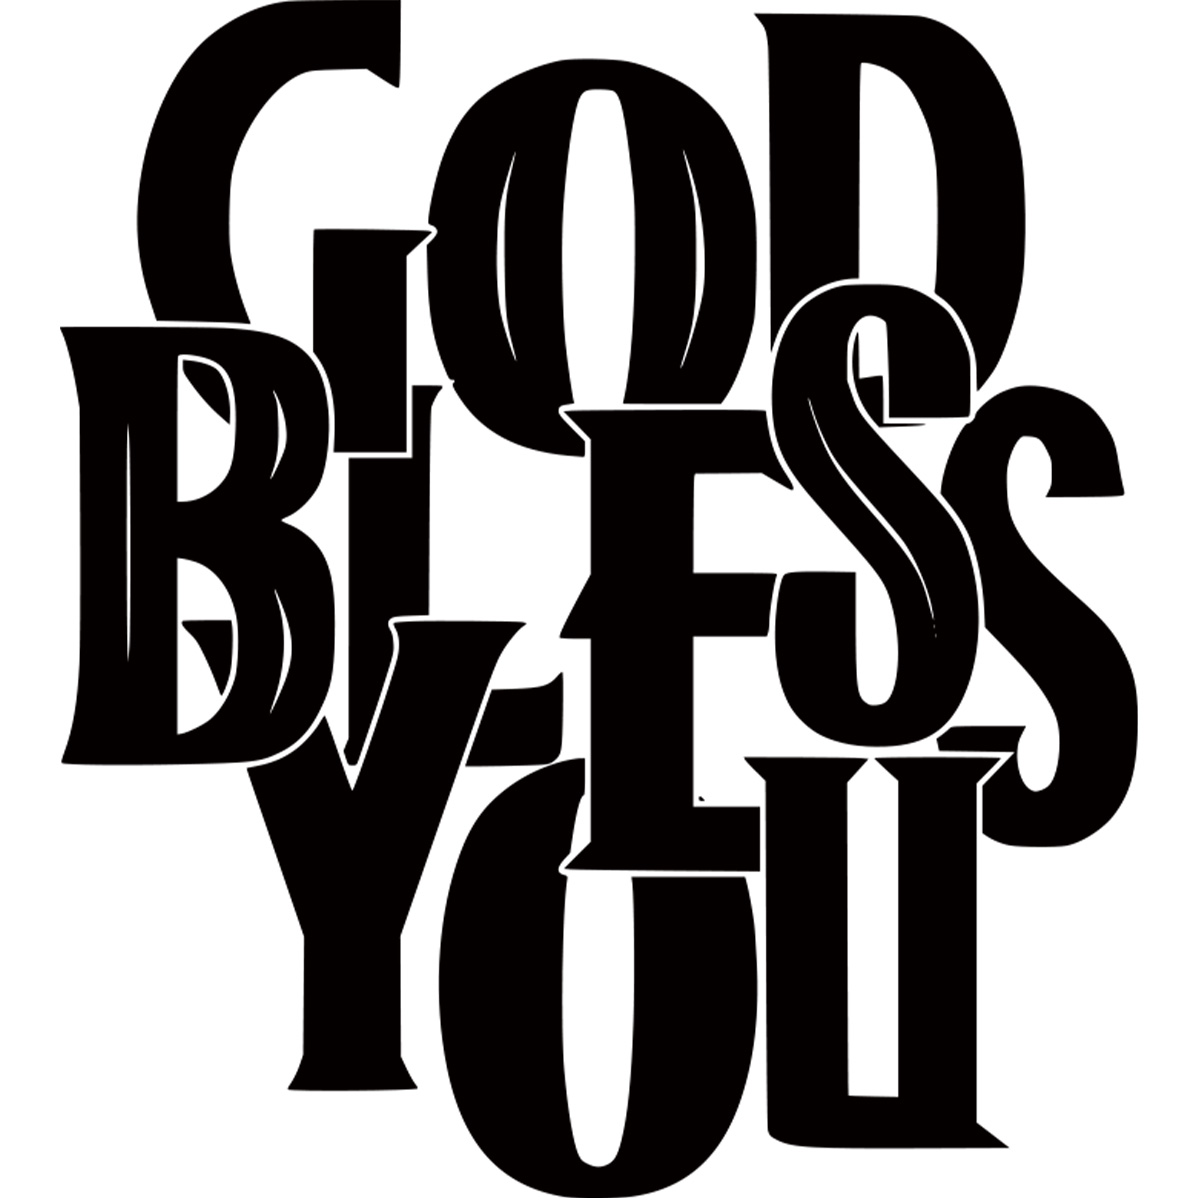 GOD BLESS YOU